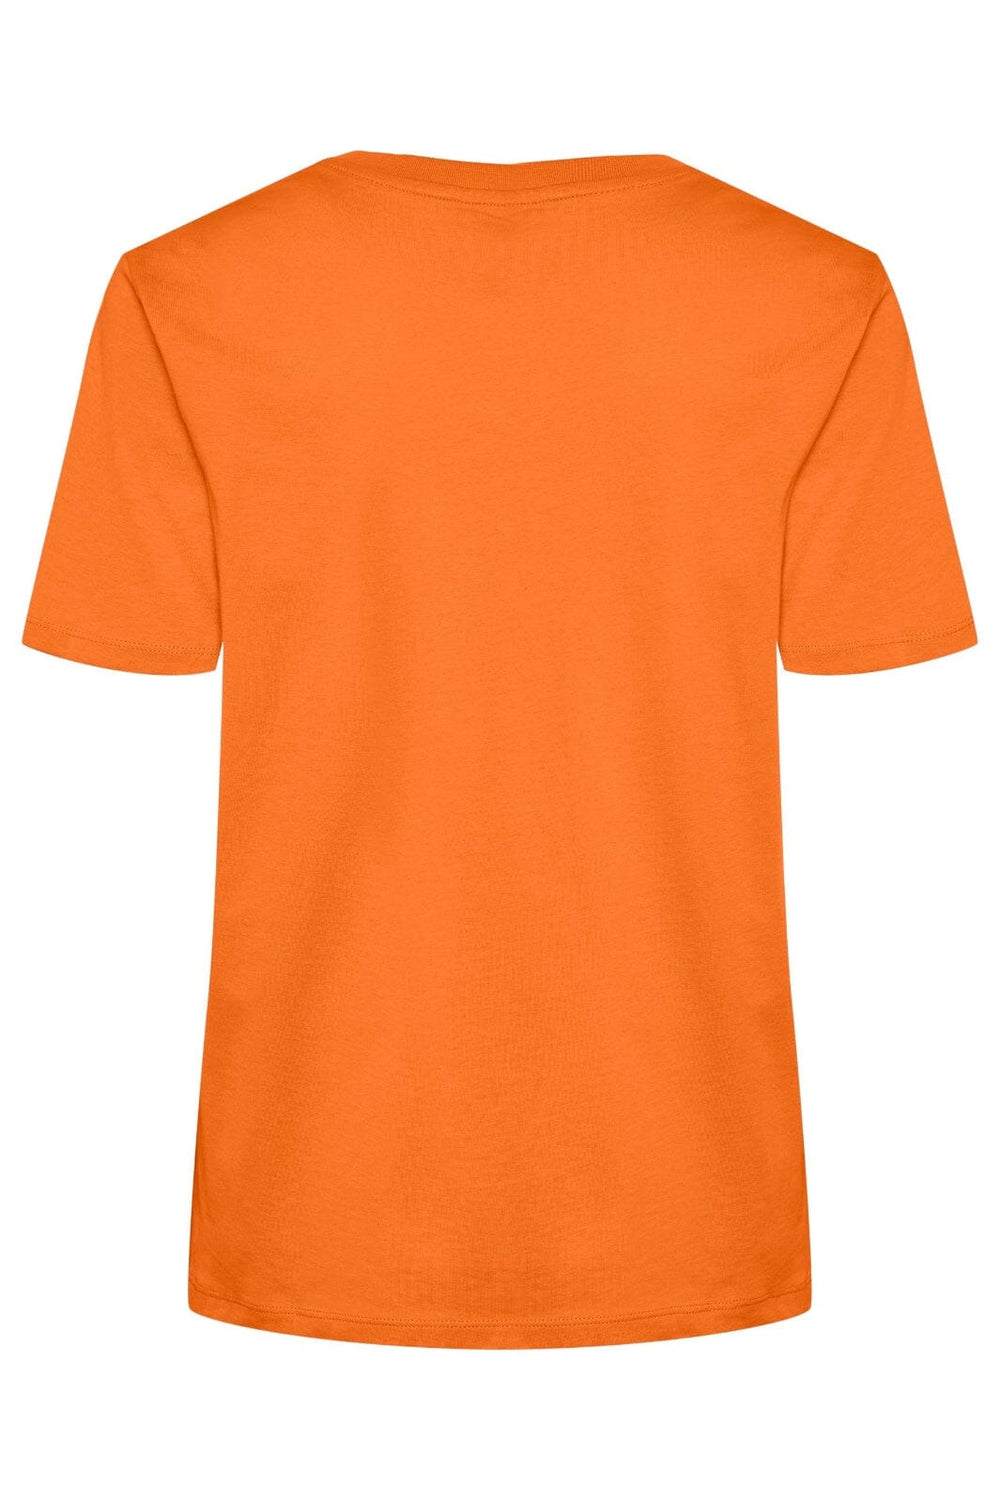 Pieces - Pcria Ss Solid Tee - 4280165 Persimmon Orange T-shirts 